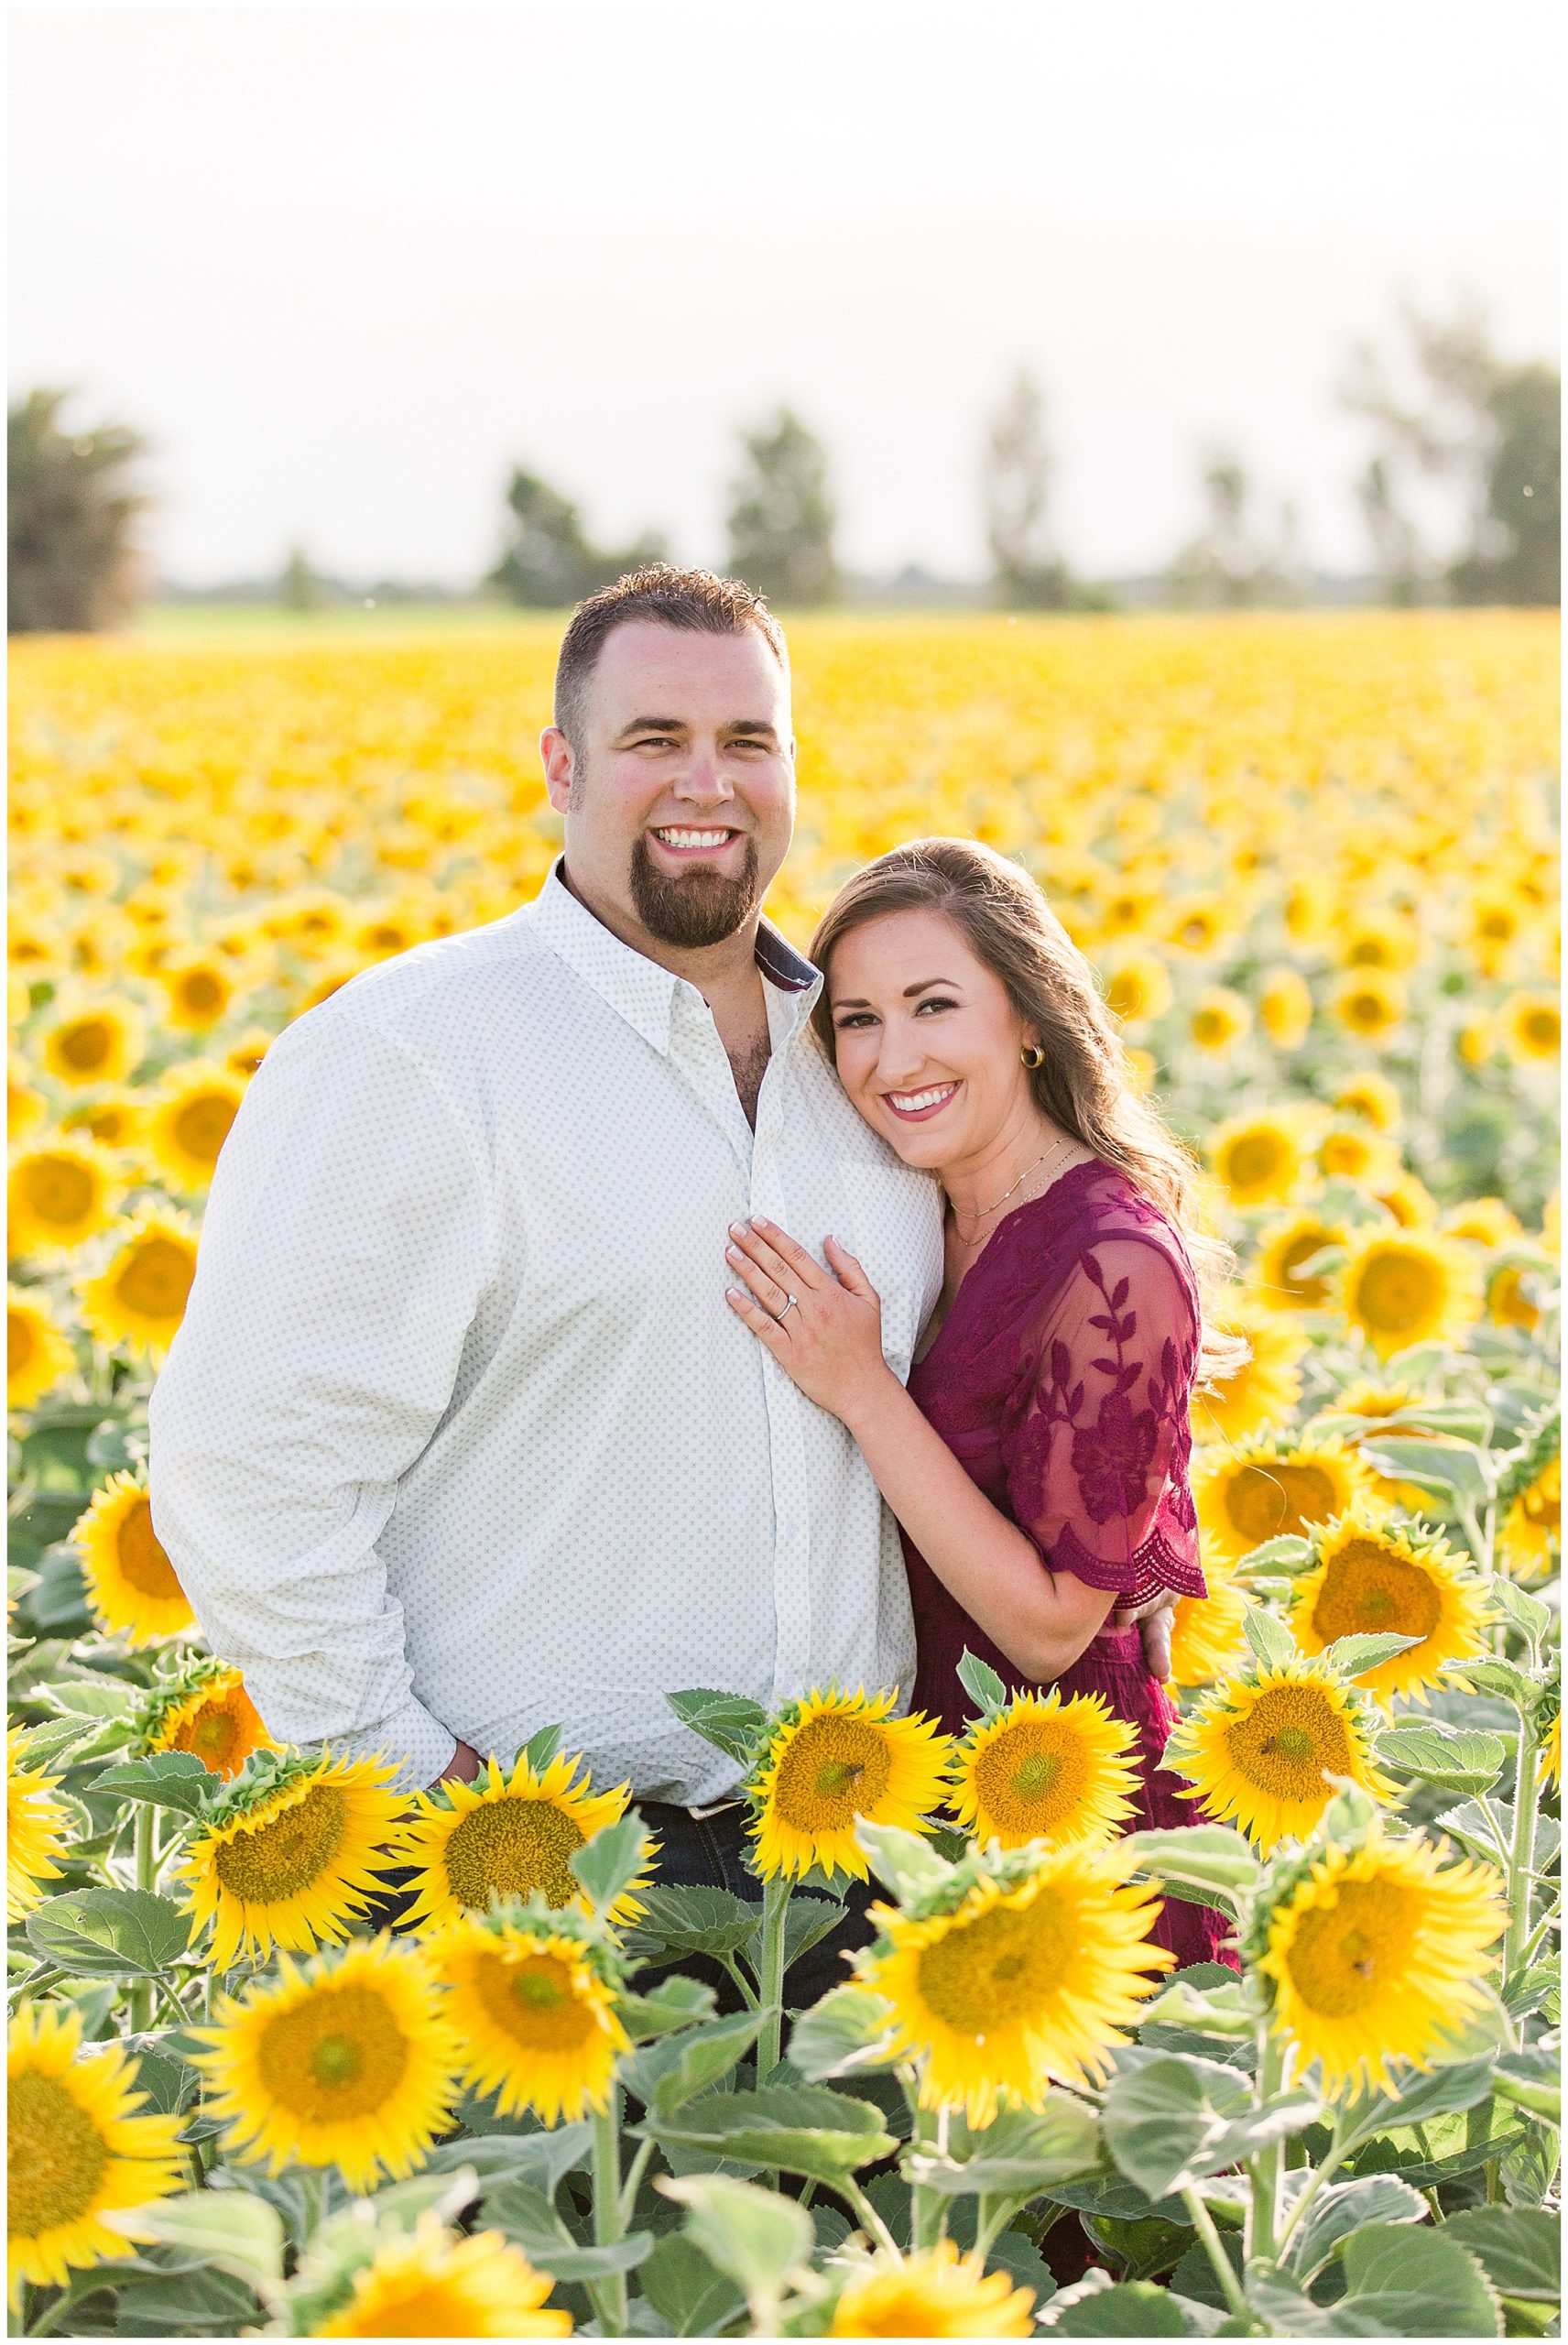 Engagement Session in Sunflower Field | Mackenzie + Matt